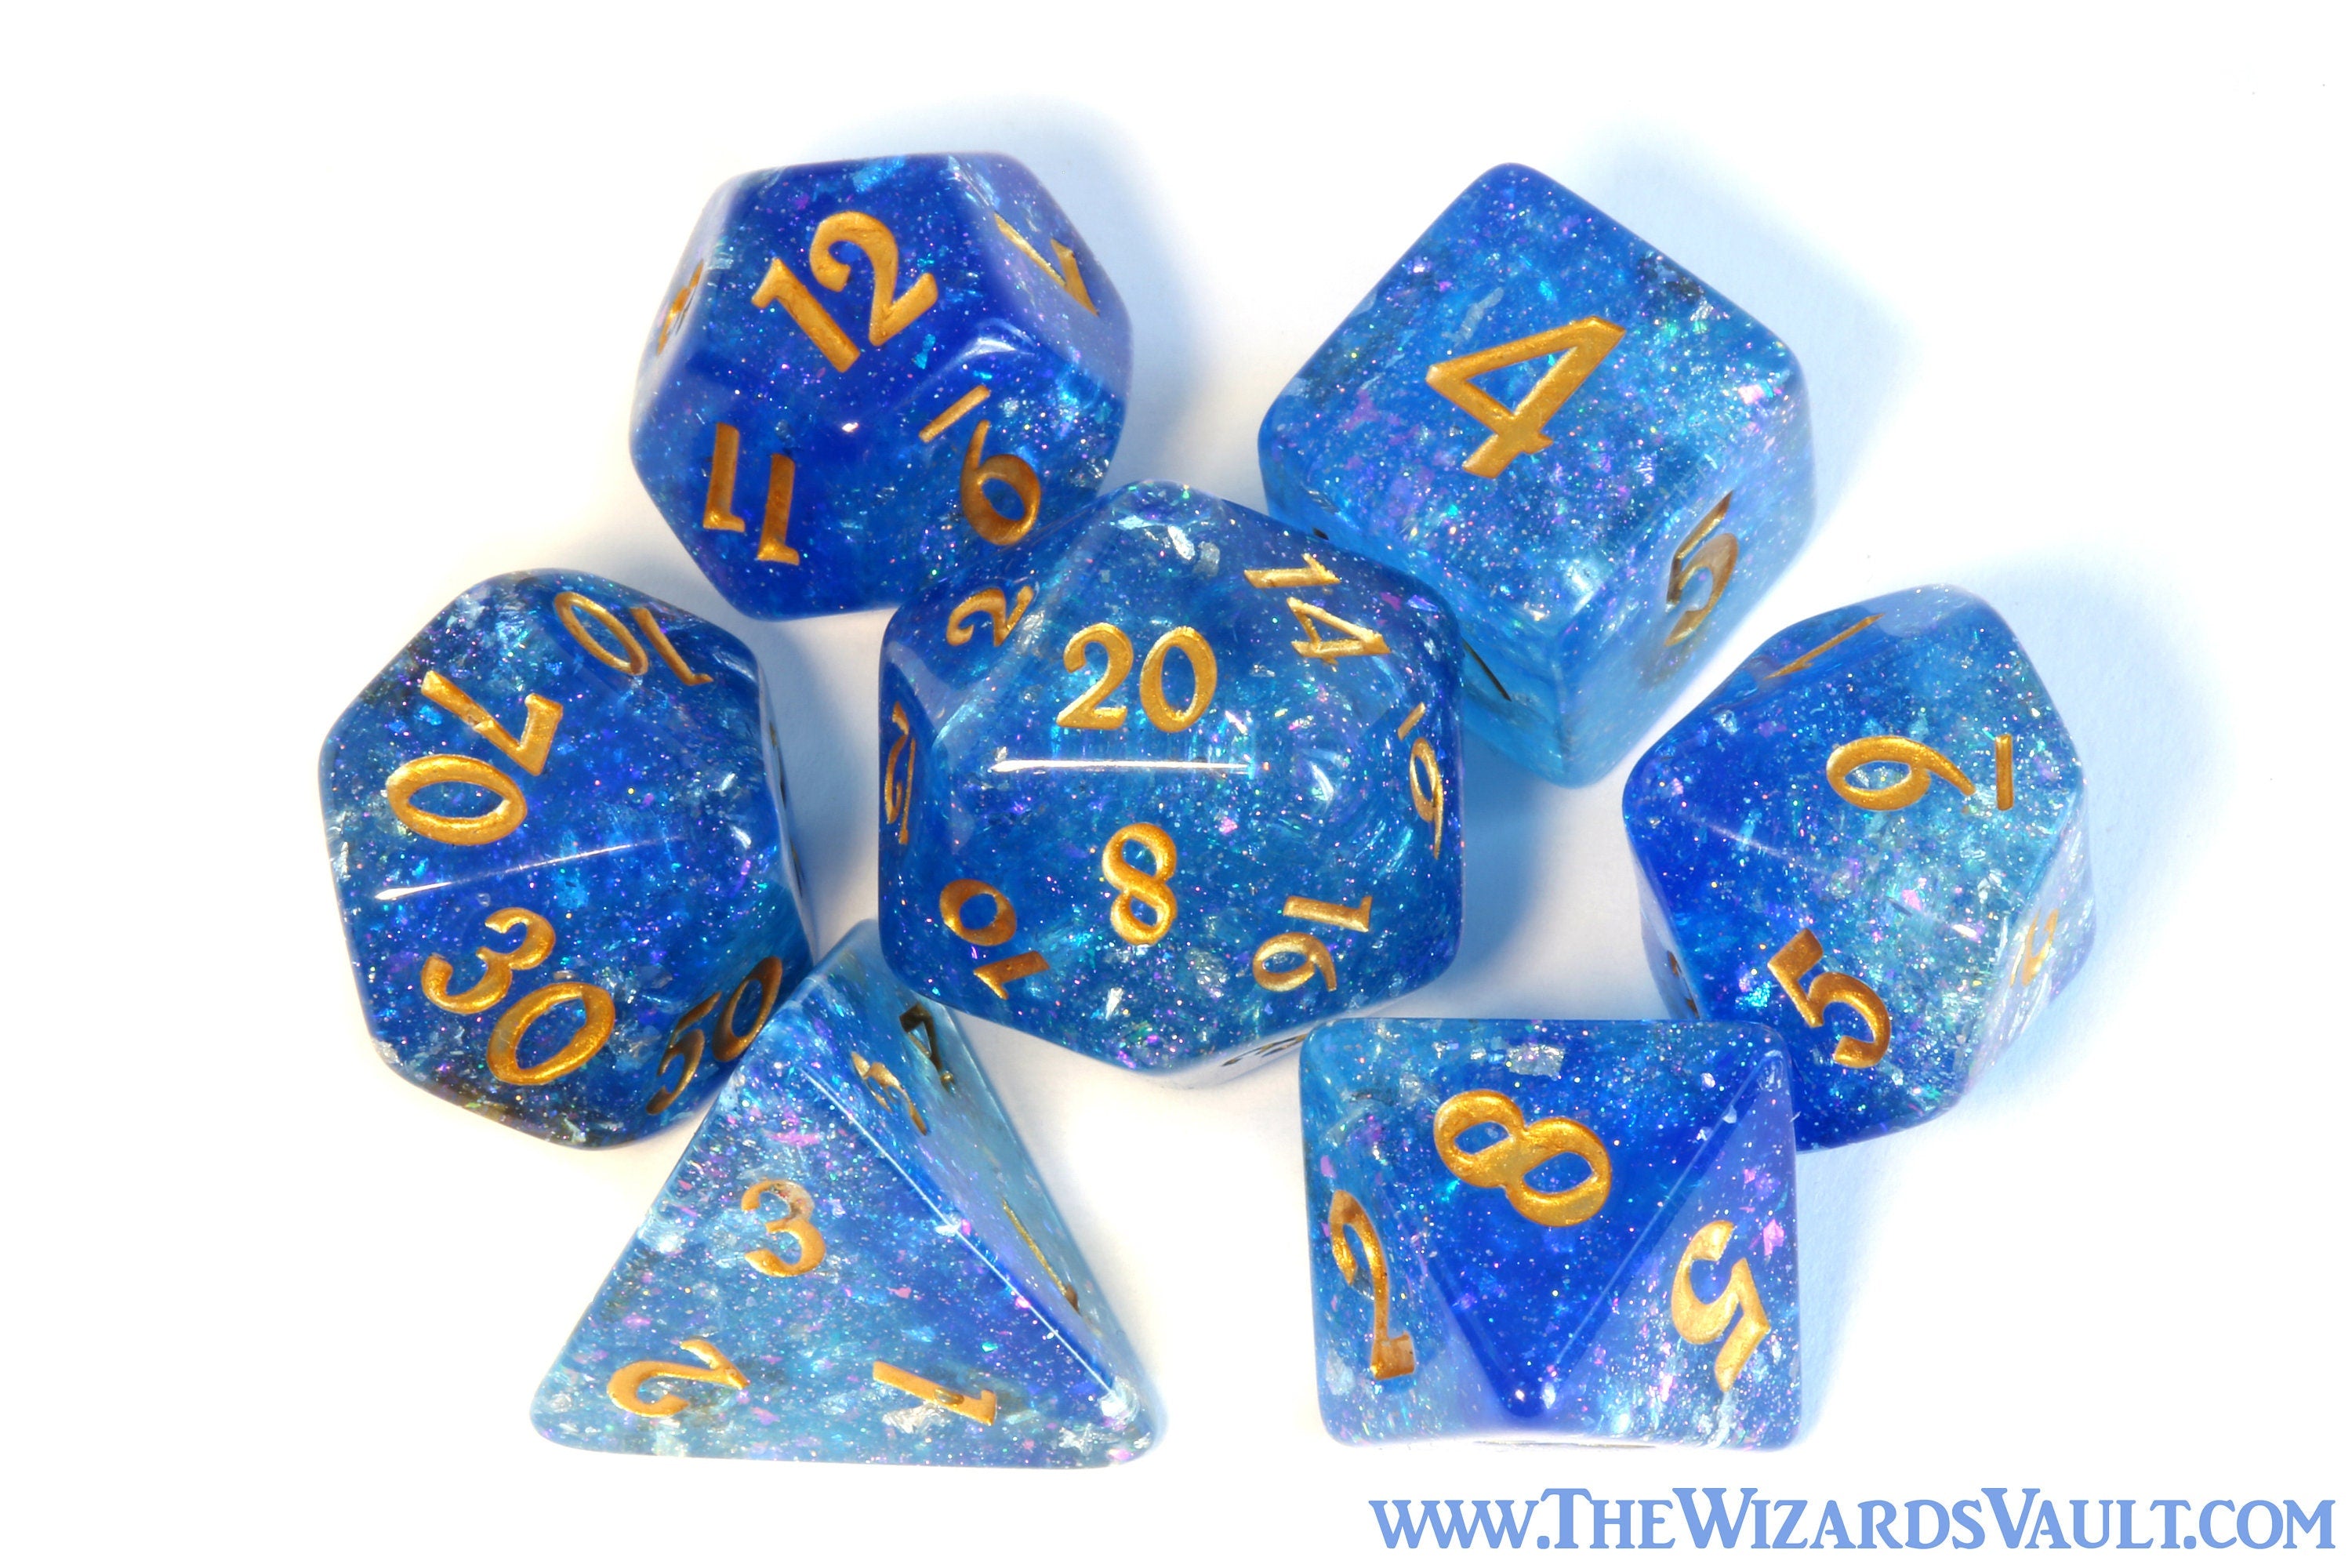 Kraken dice box with galactic Sapphire dice set